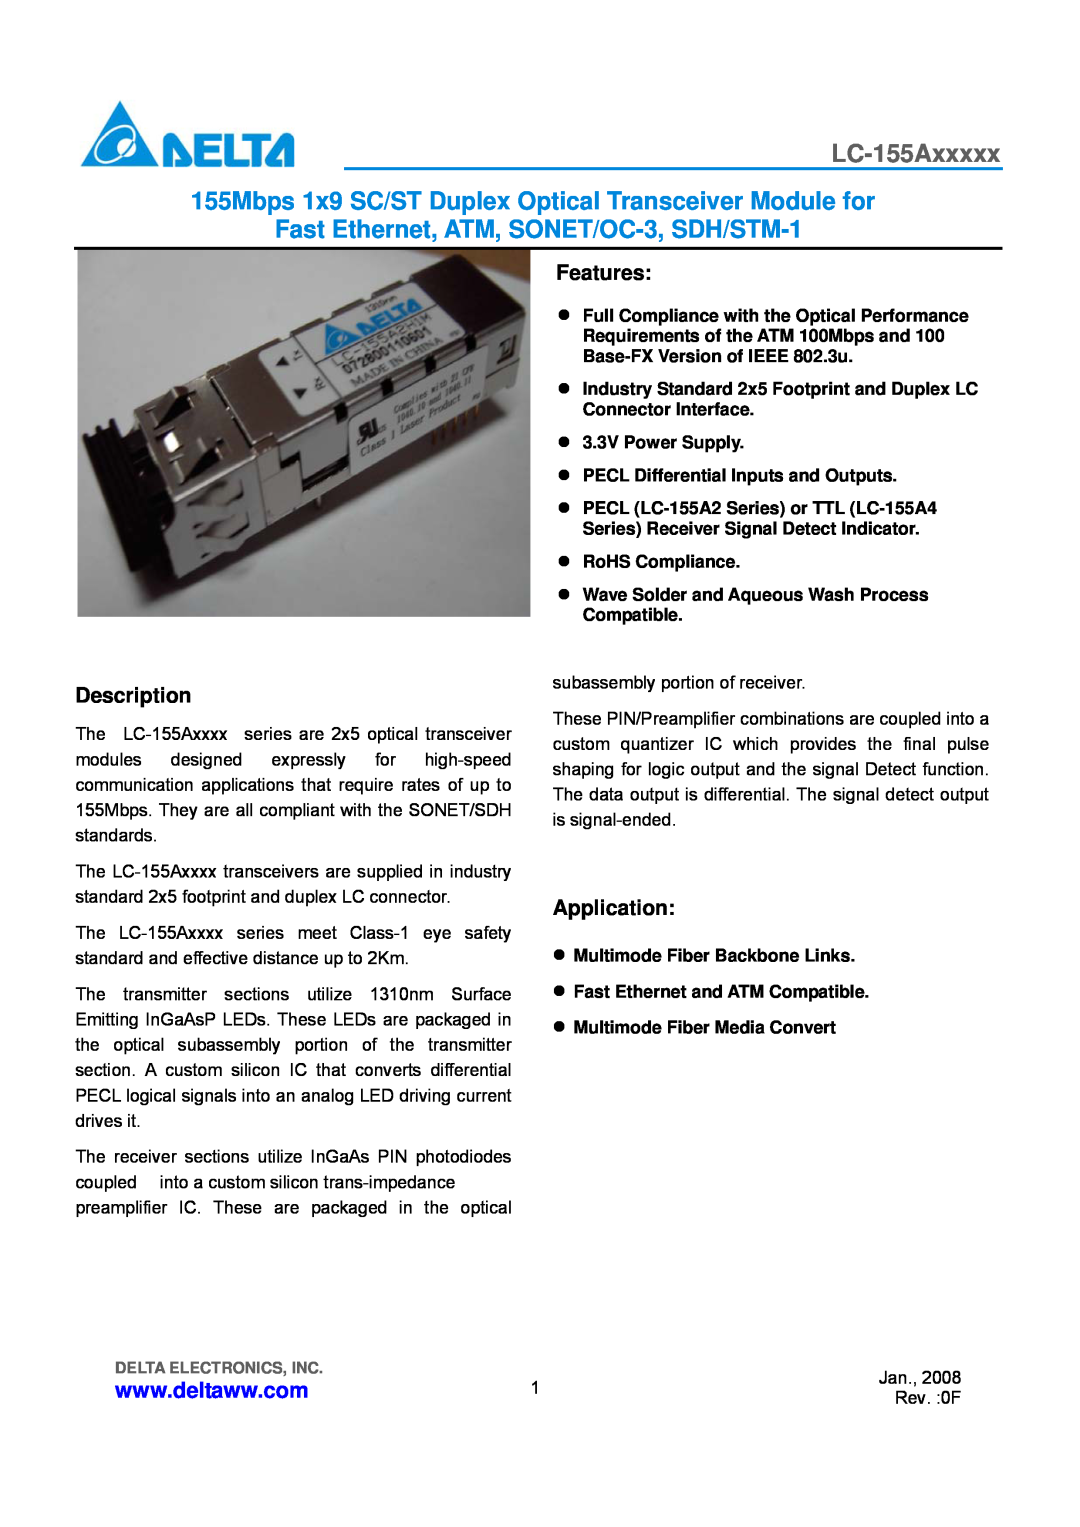 Delta Electronics LC-155Axxxxx manual Features, Description, Application 